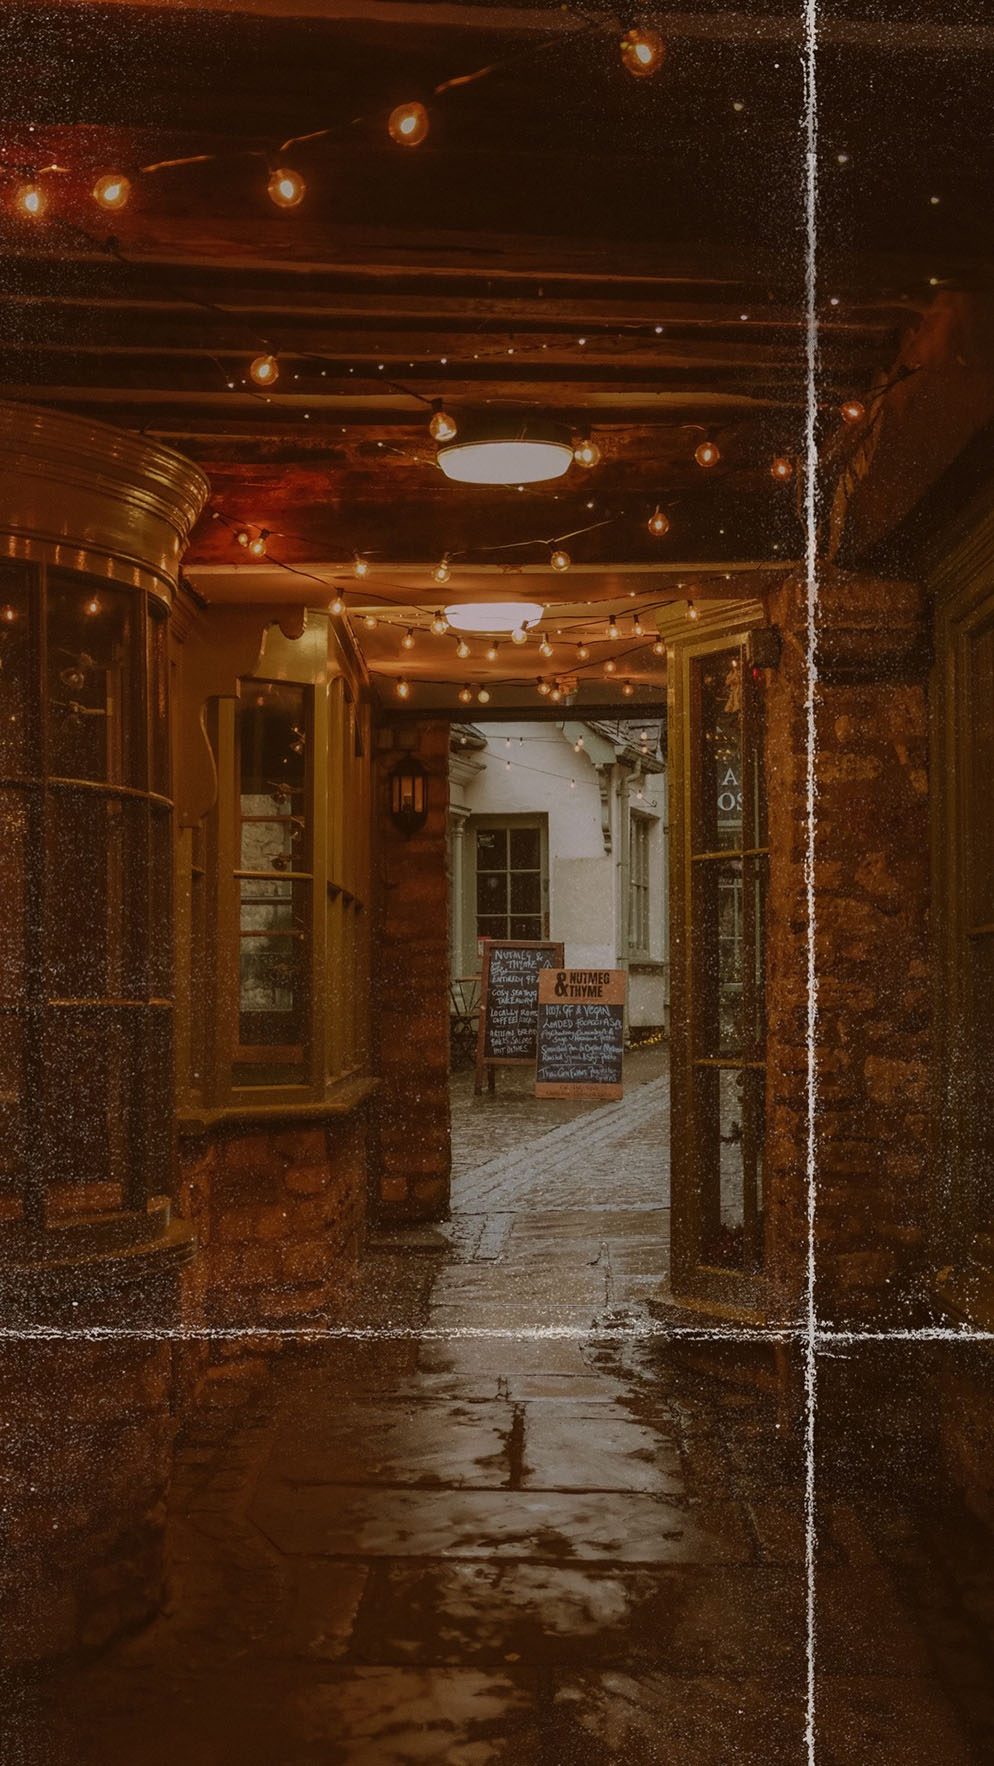 An atmospheric alleyway in the village of Broadway